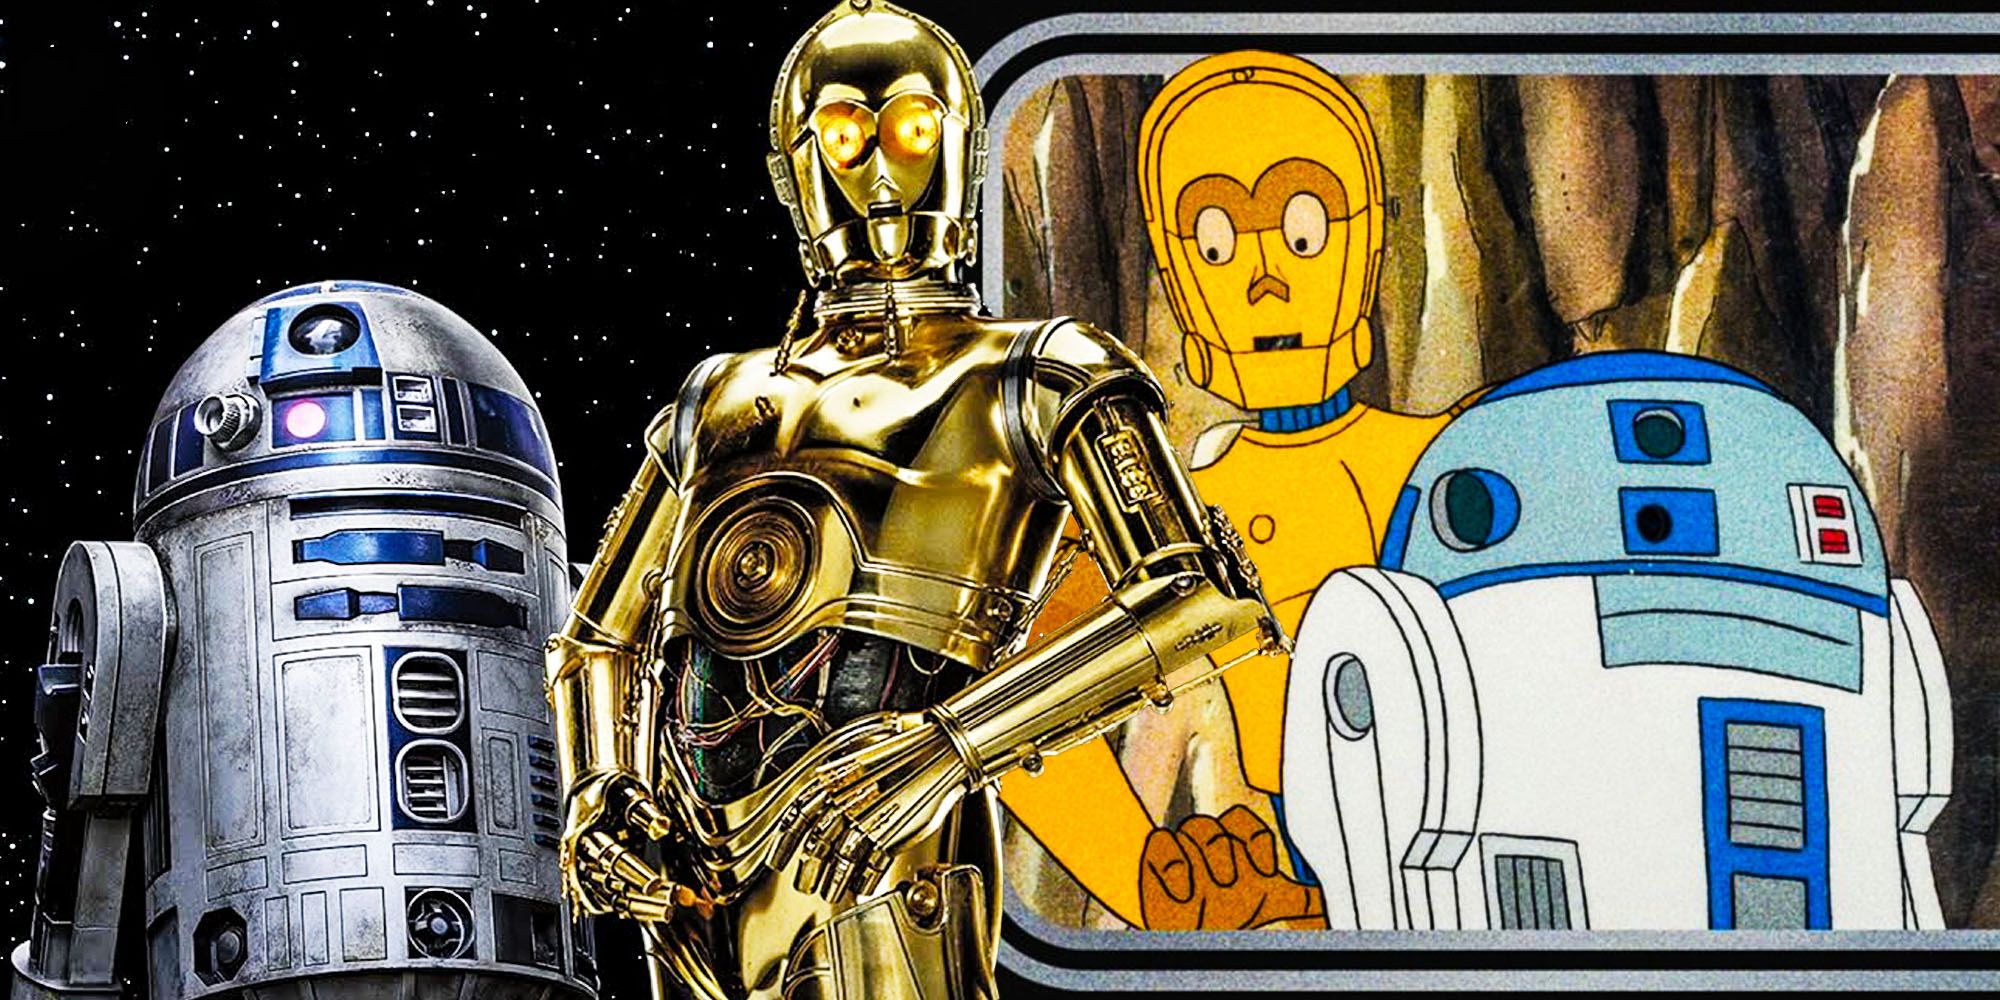 Star wars droids canon R2D2 C3PO